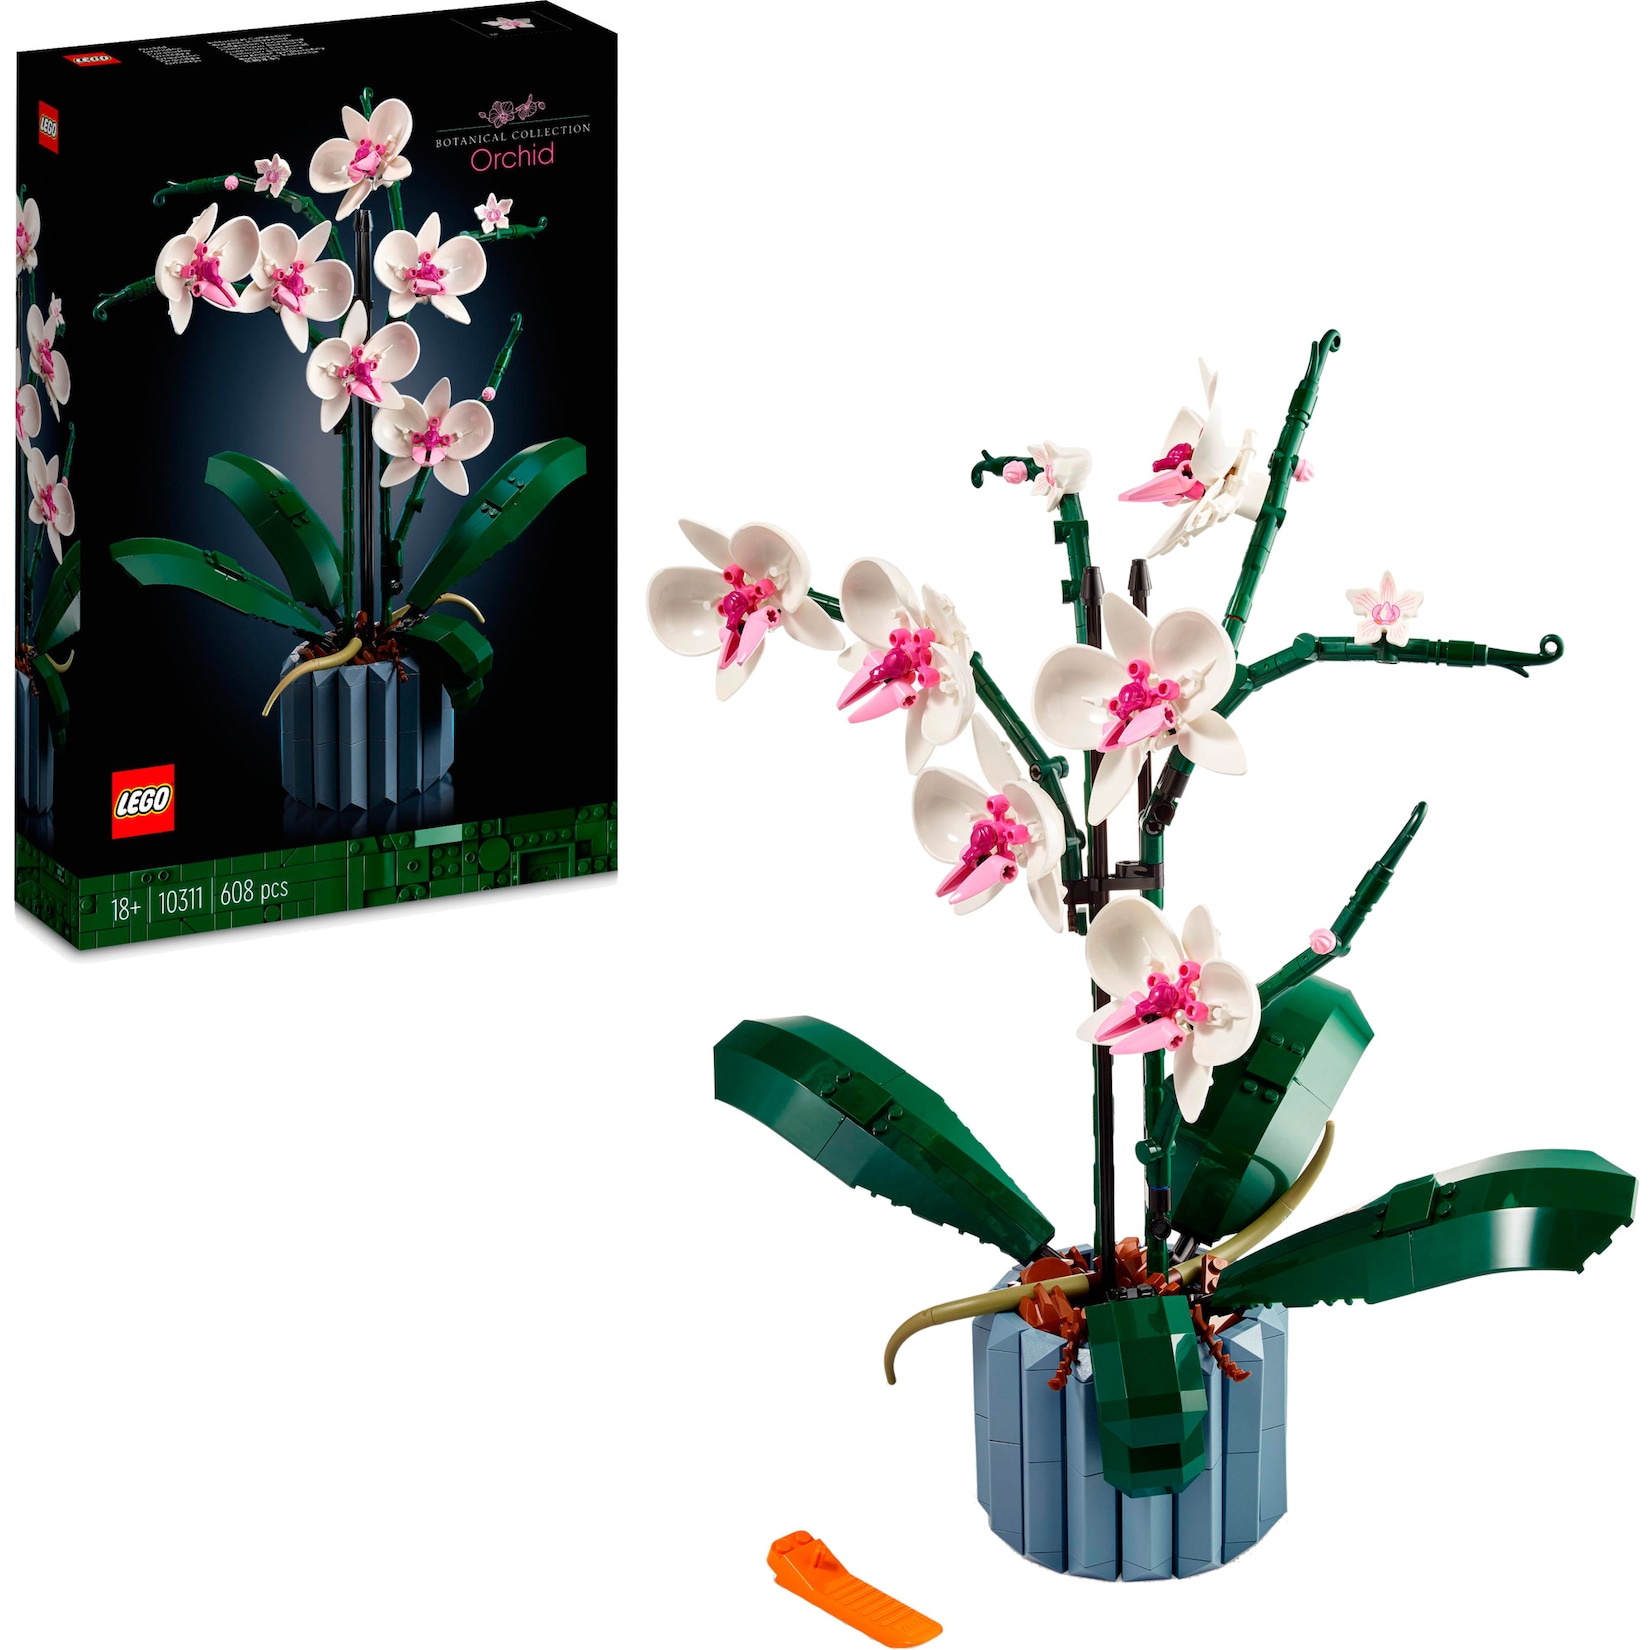 LEGO Konstruktionsspielzeug Botanical Collection Orchidee